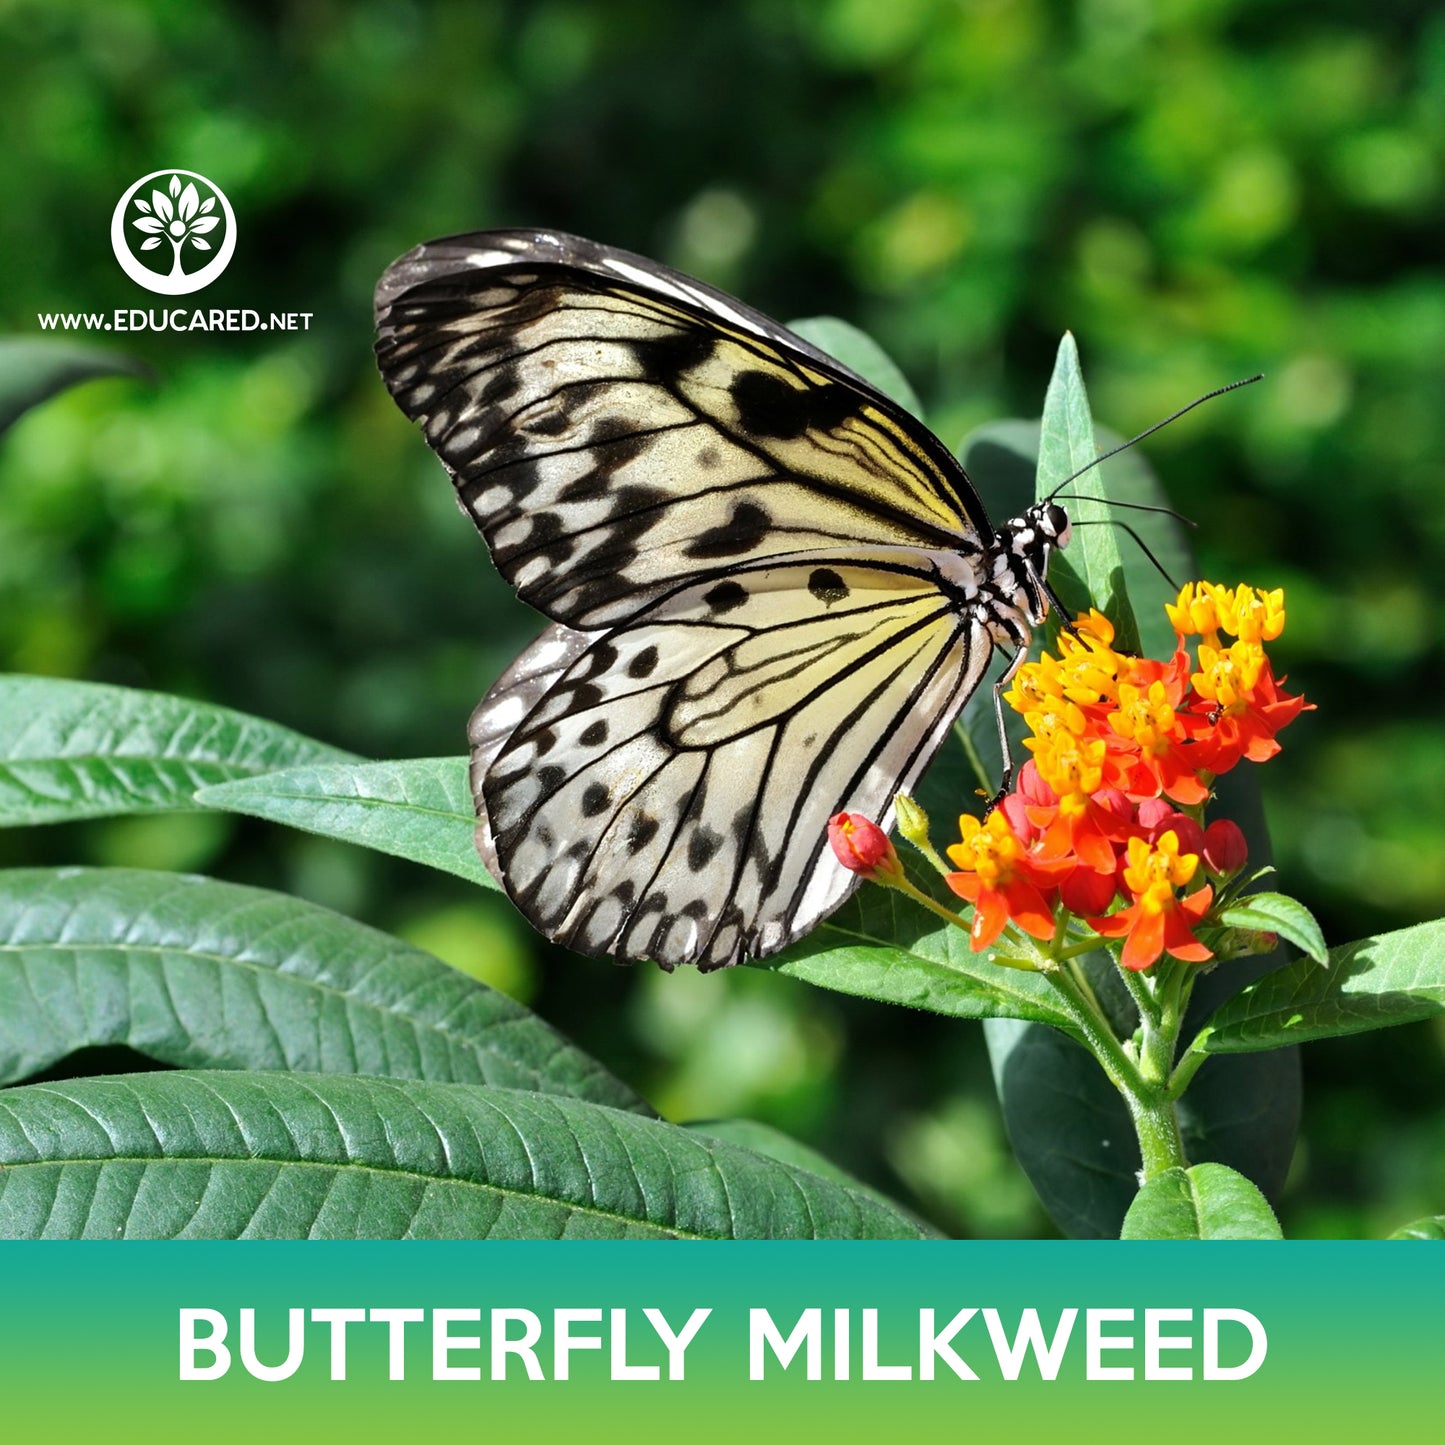 Butterfly Milkweed Seeds, Asclepias Tuberosa